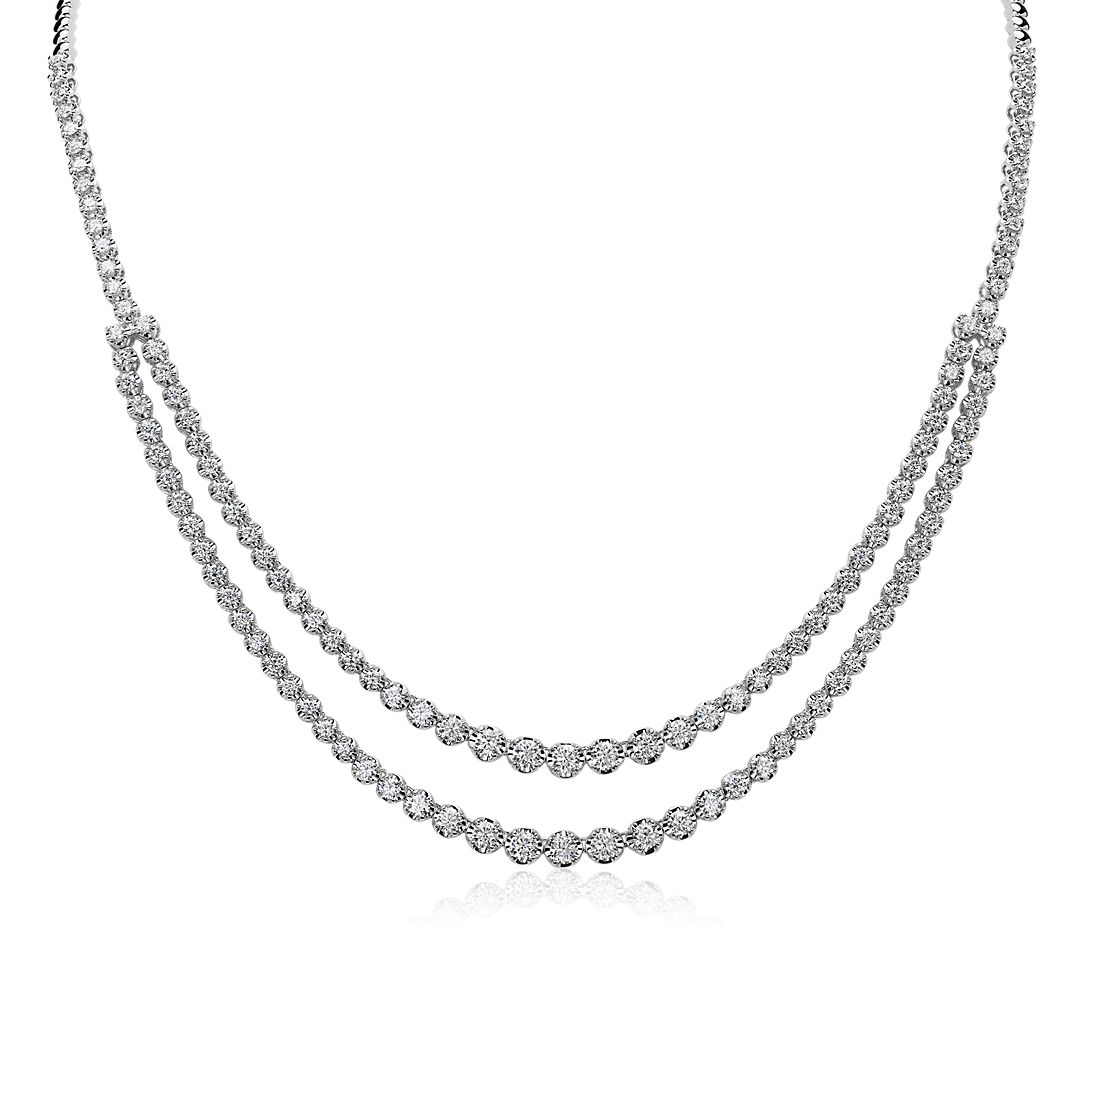 Double Row Diamond Necklace in 14k White Gold (5 1/4 ct. tw.)